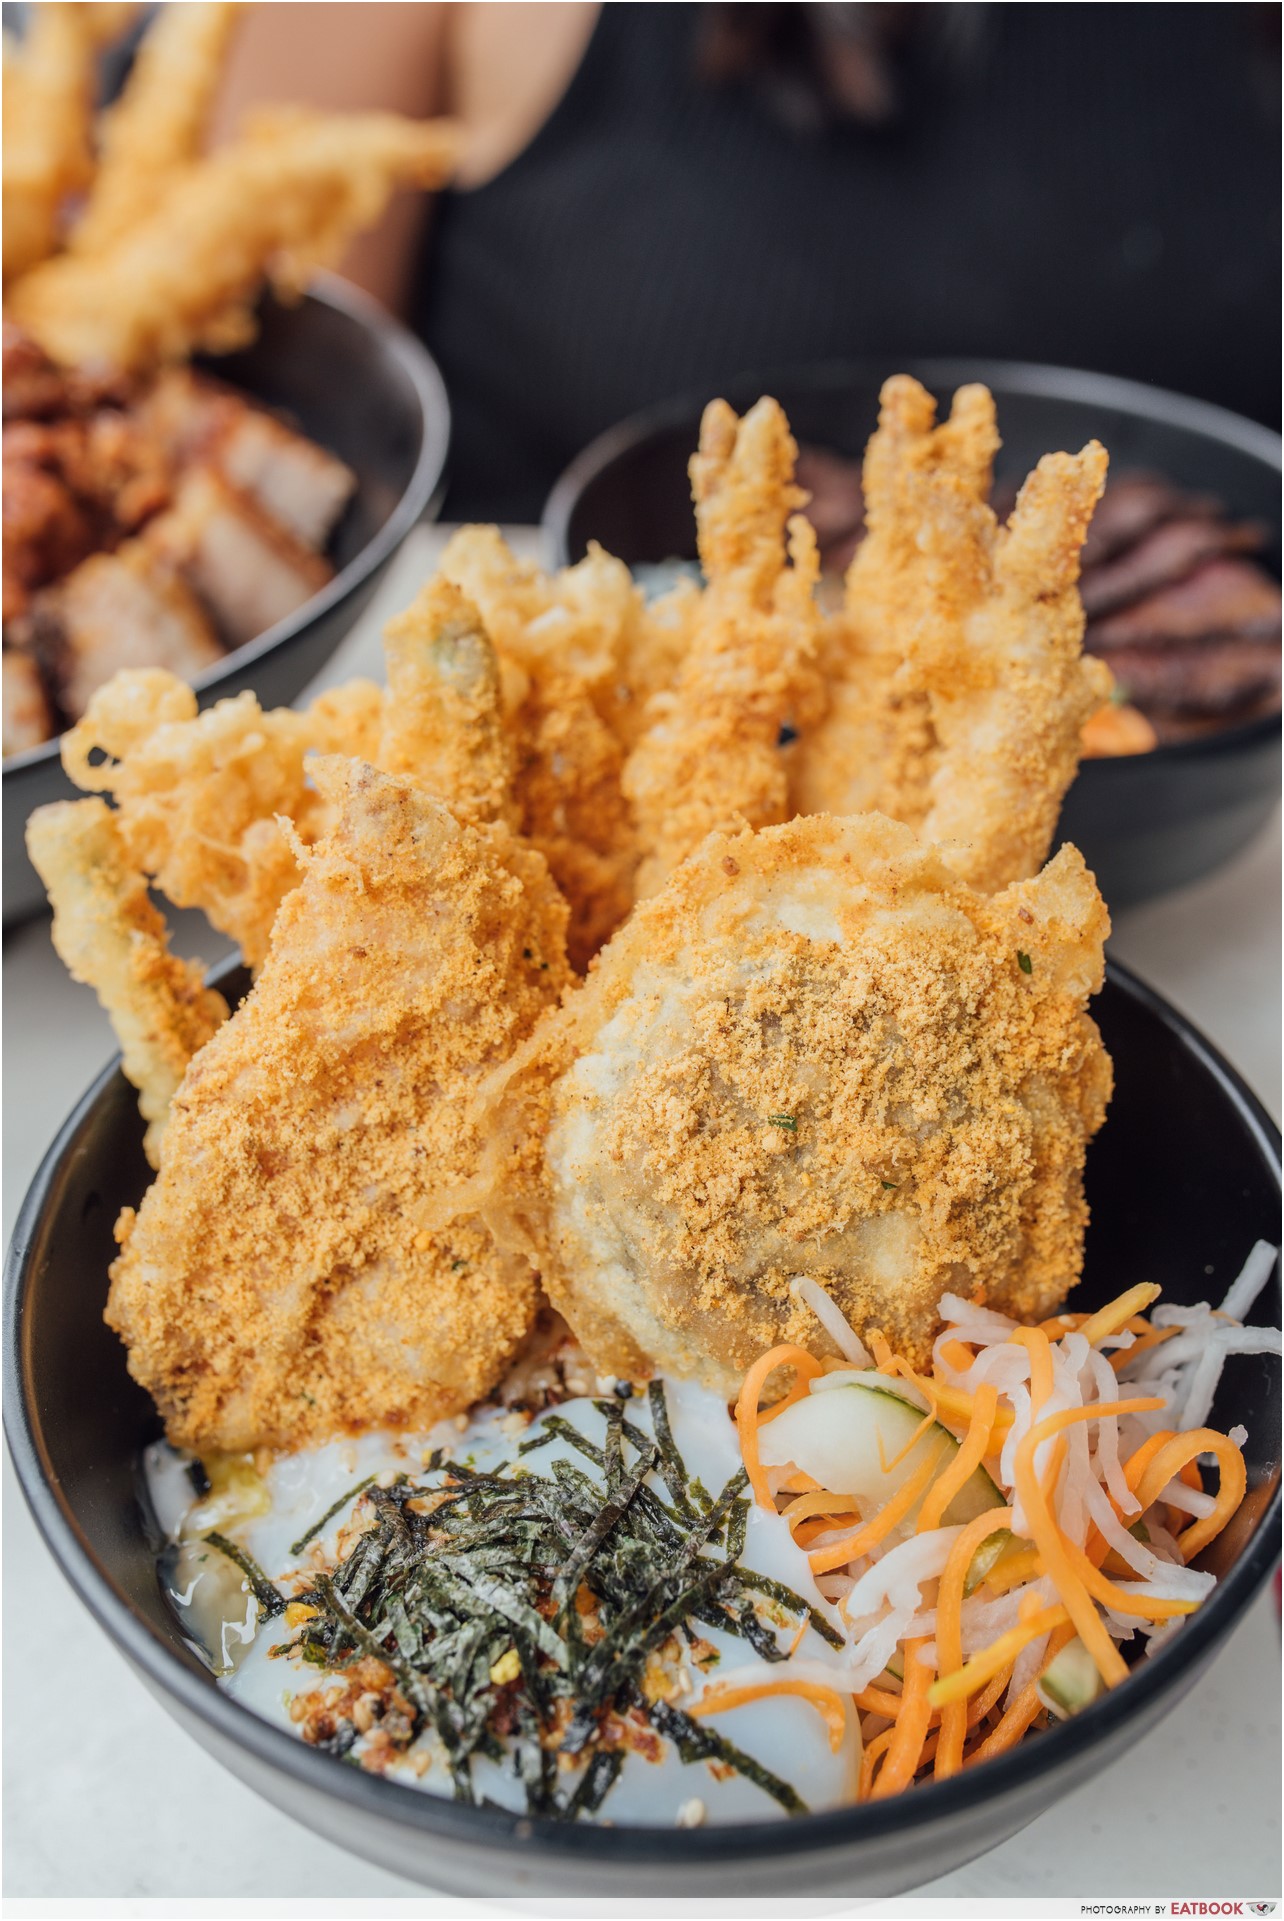 affordable tempura don - don